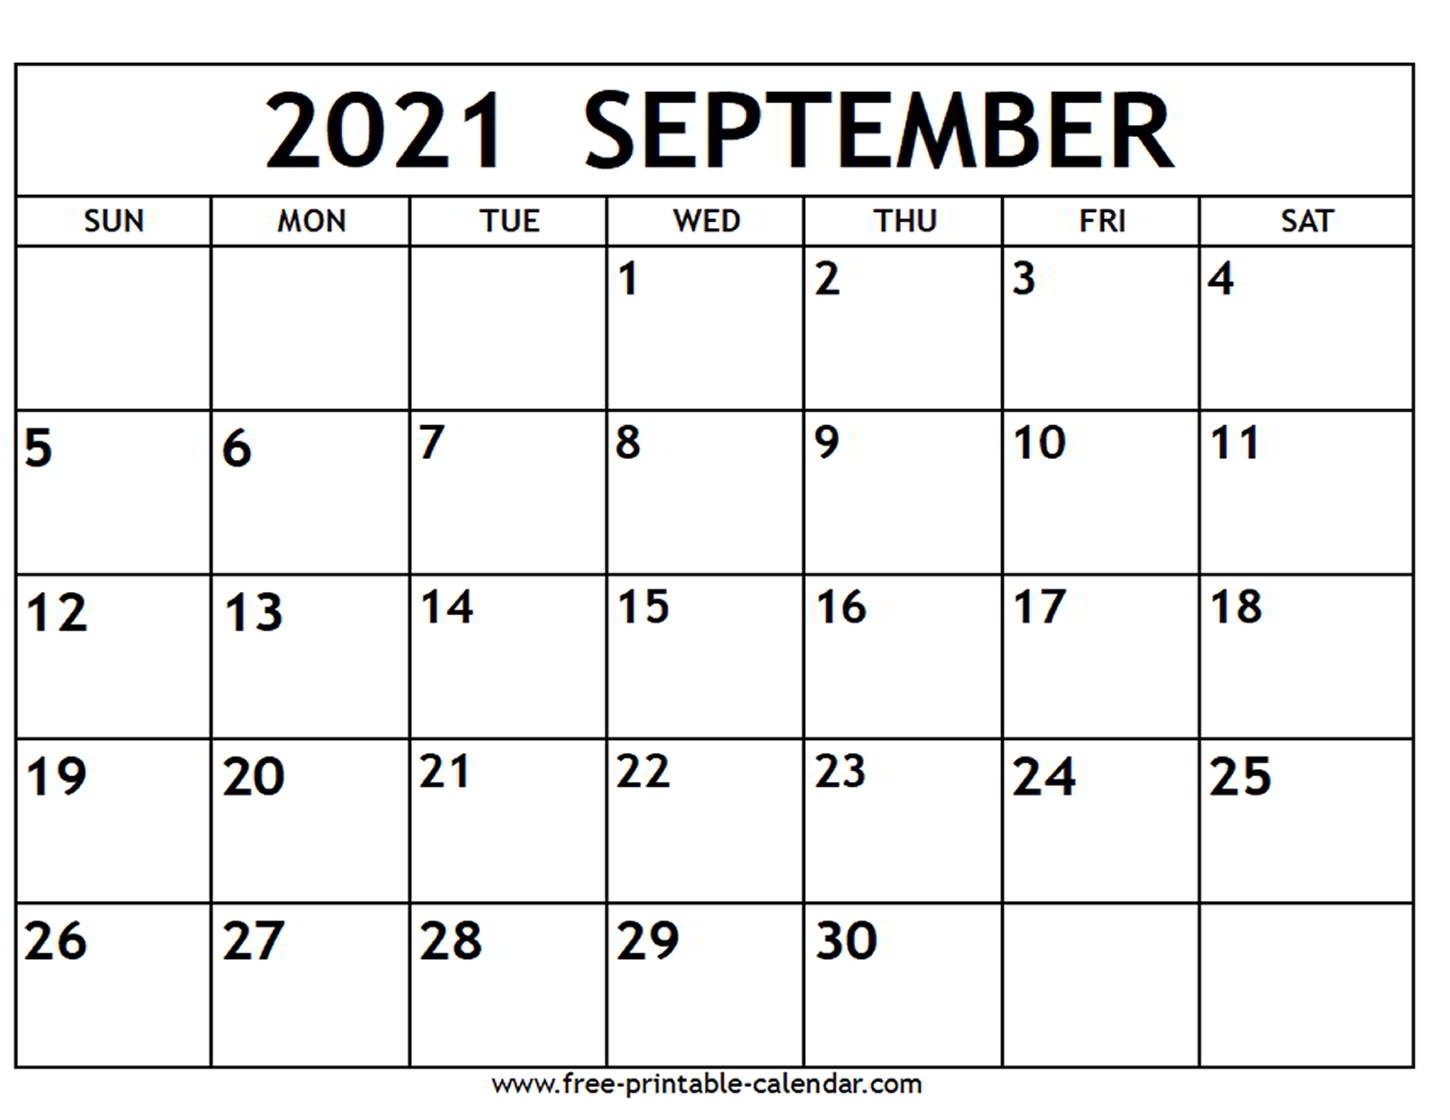 Catch September 2021 Calendar Printable Images